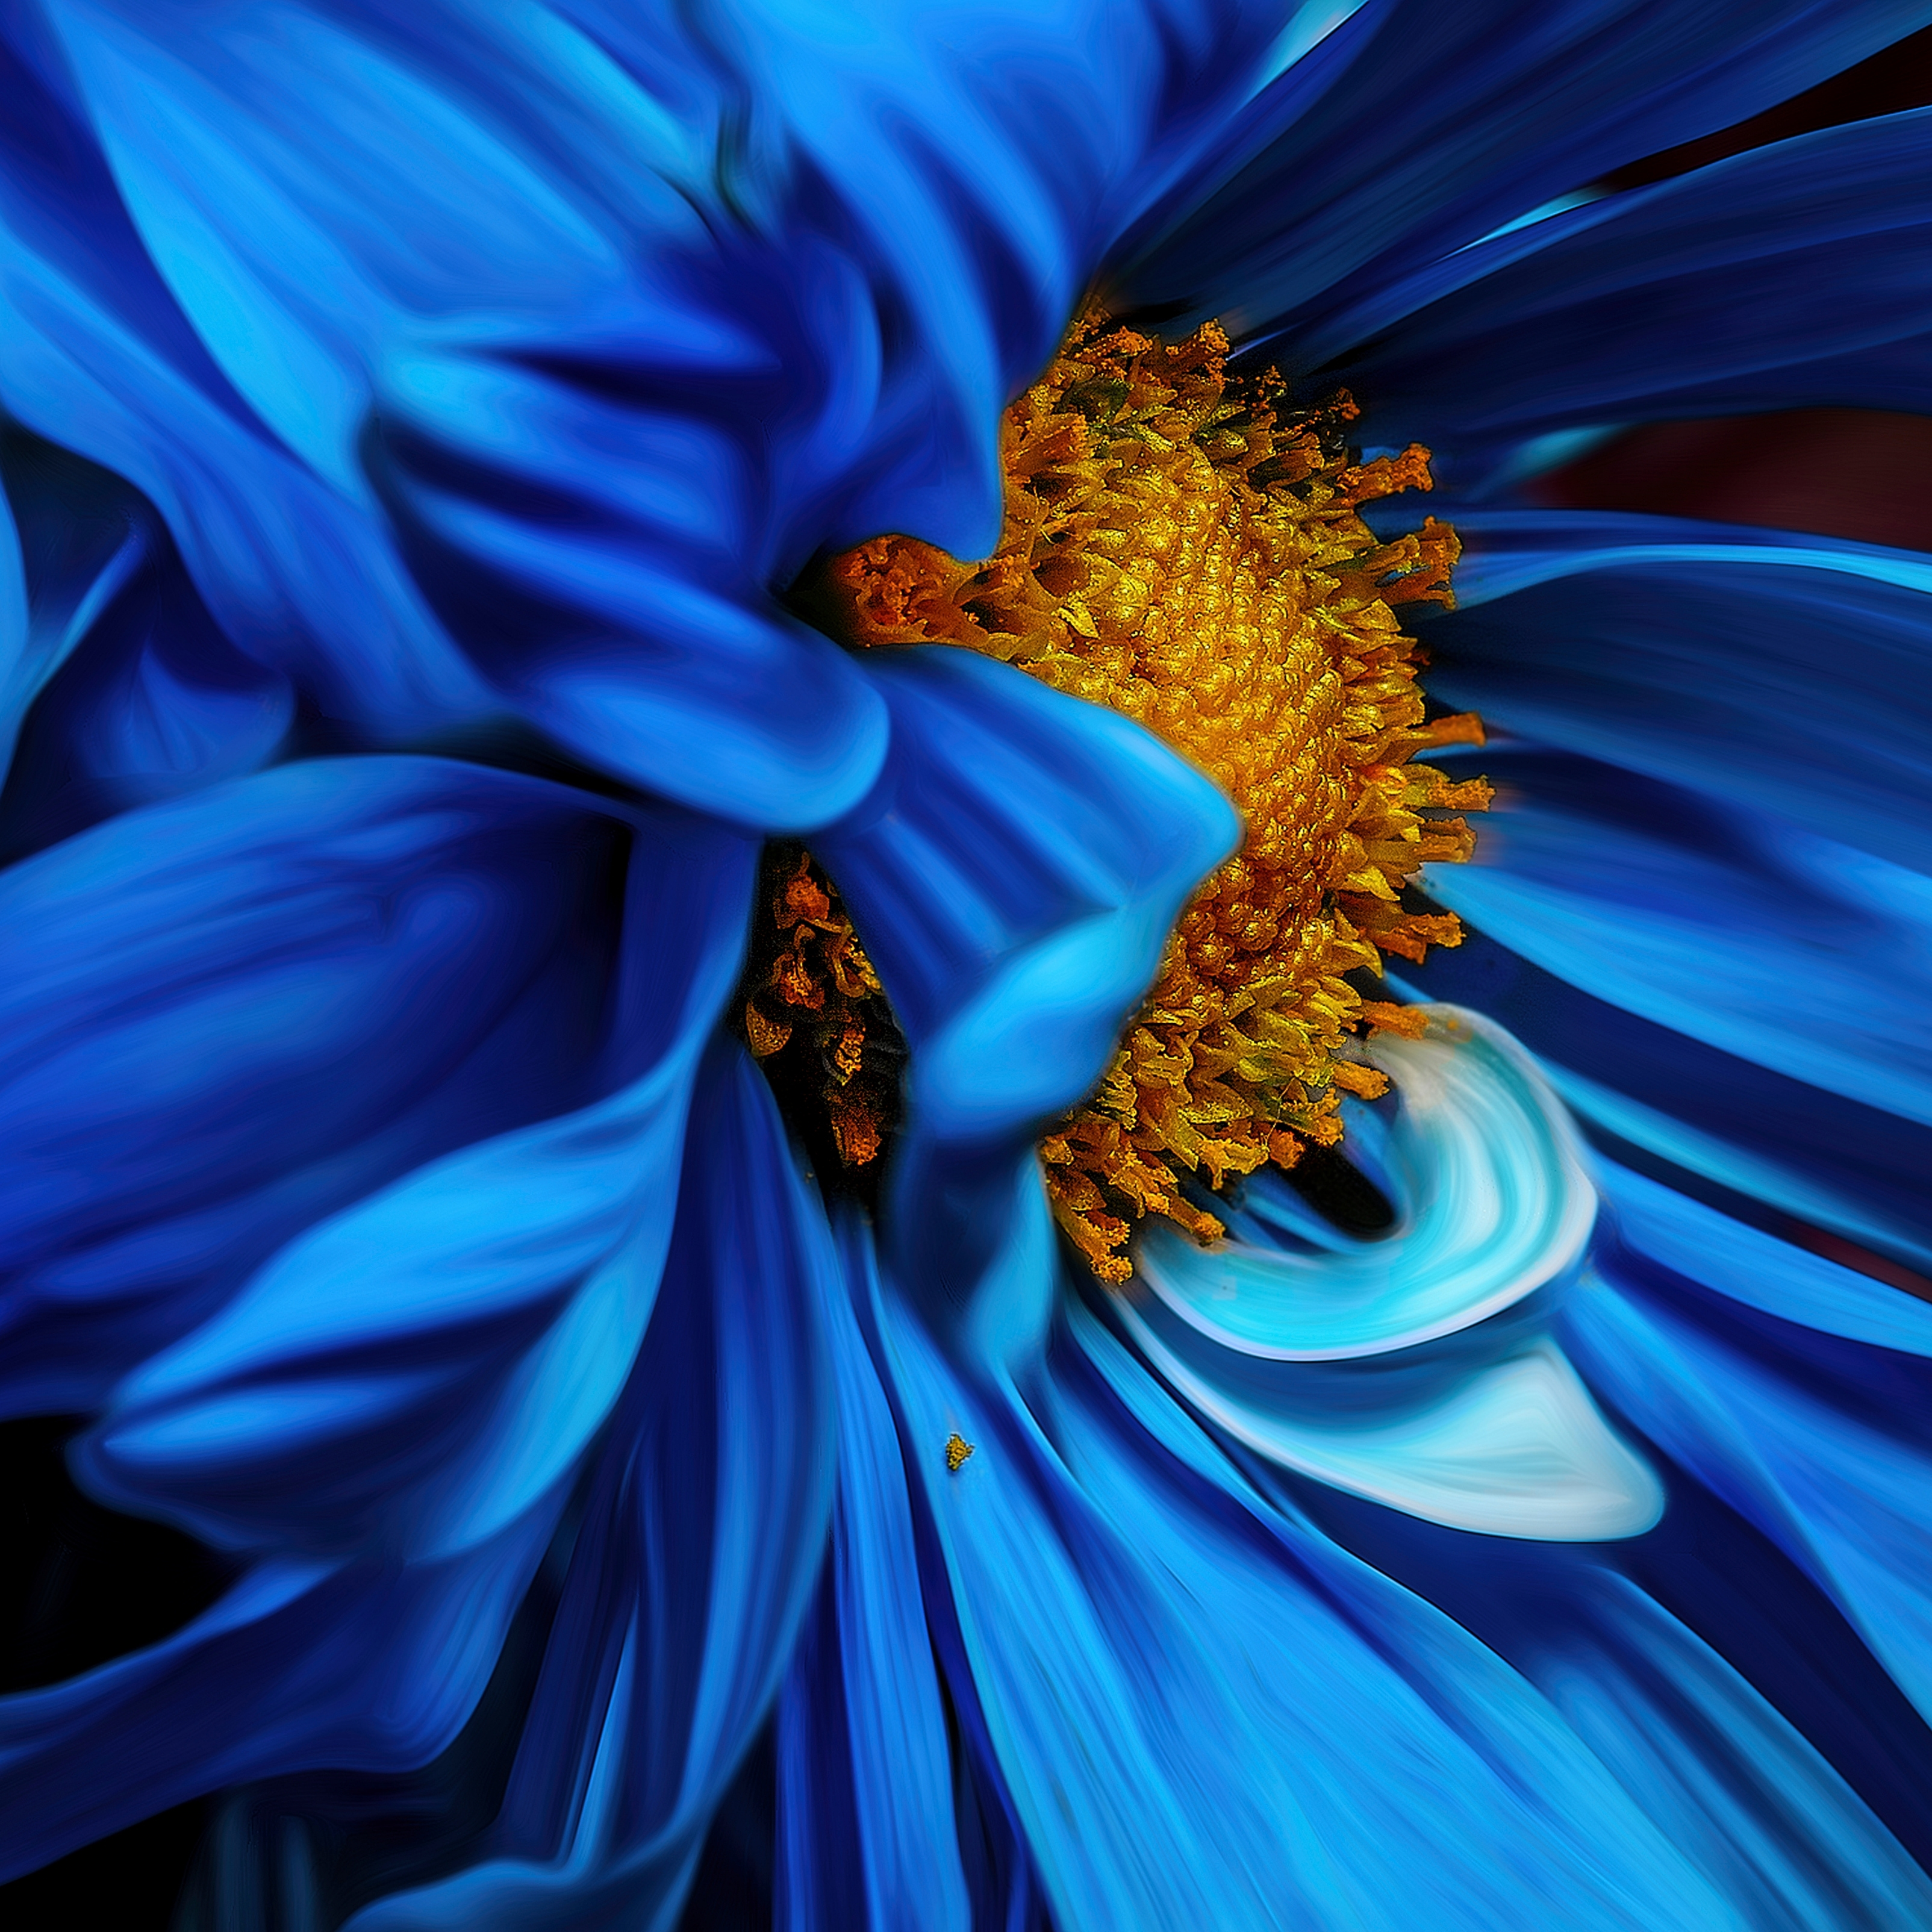 iPad Wallpapers Beautiful Blue Flower Focus Petals iPad Wallpaper 3208x3208 px